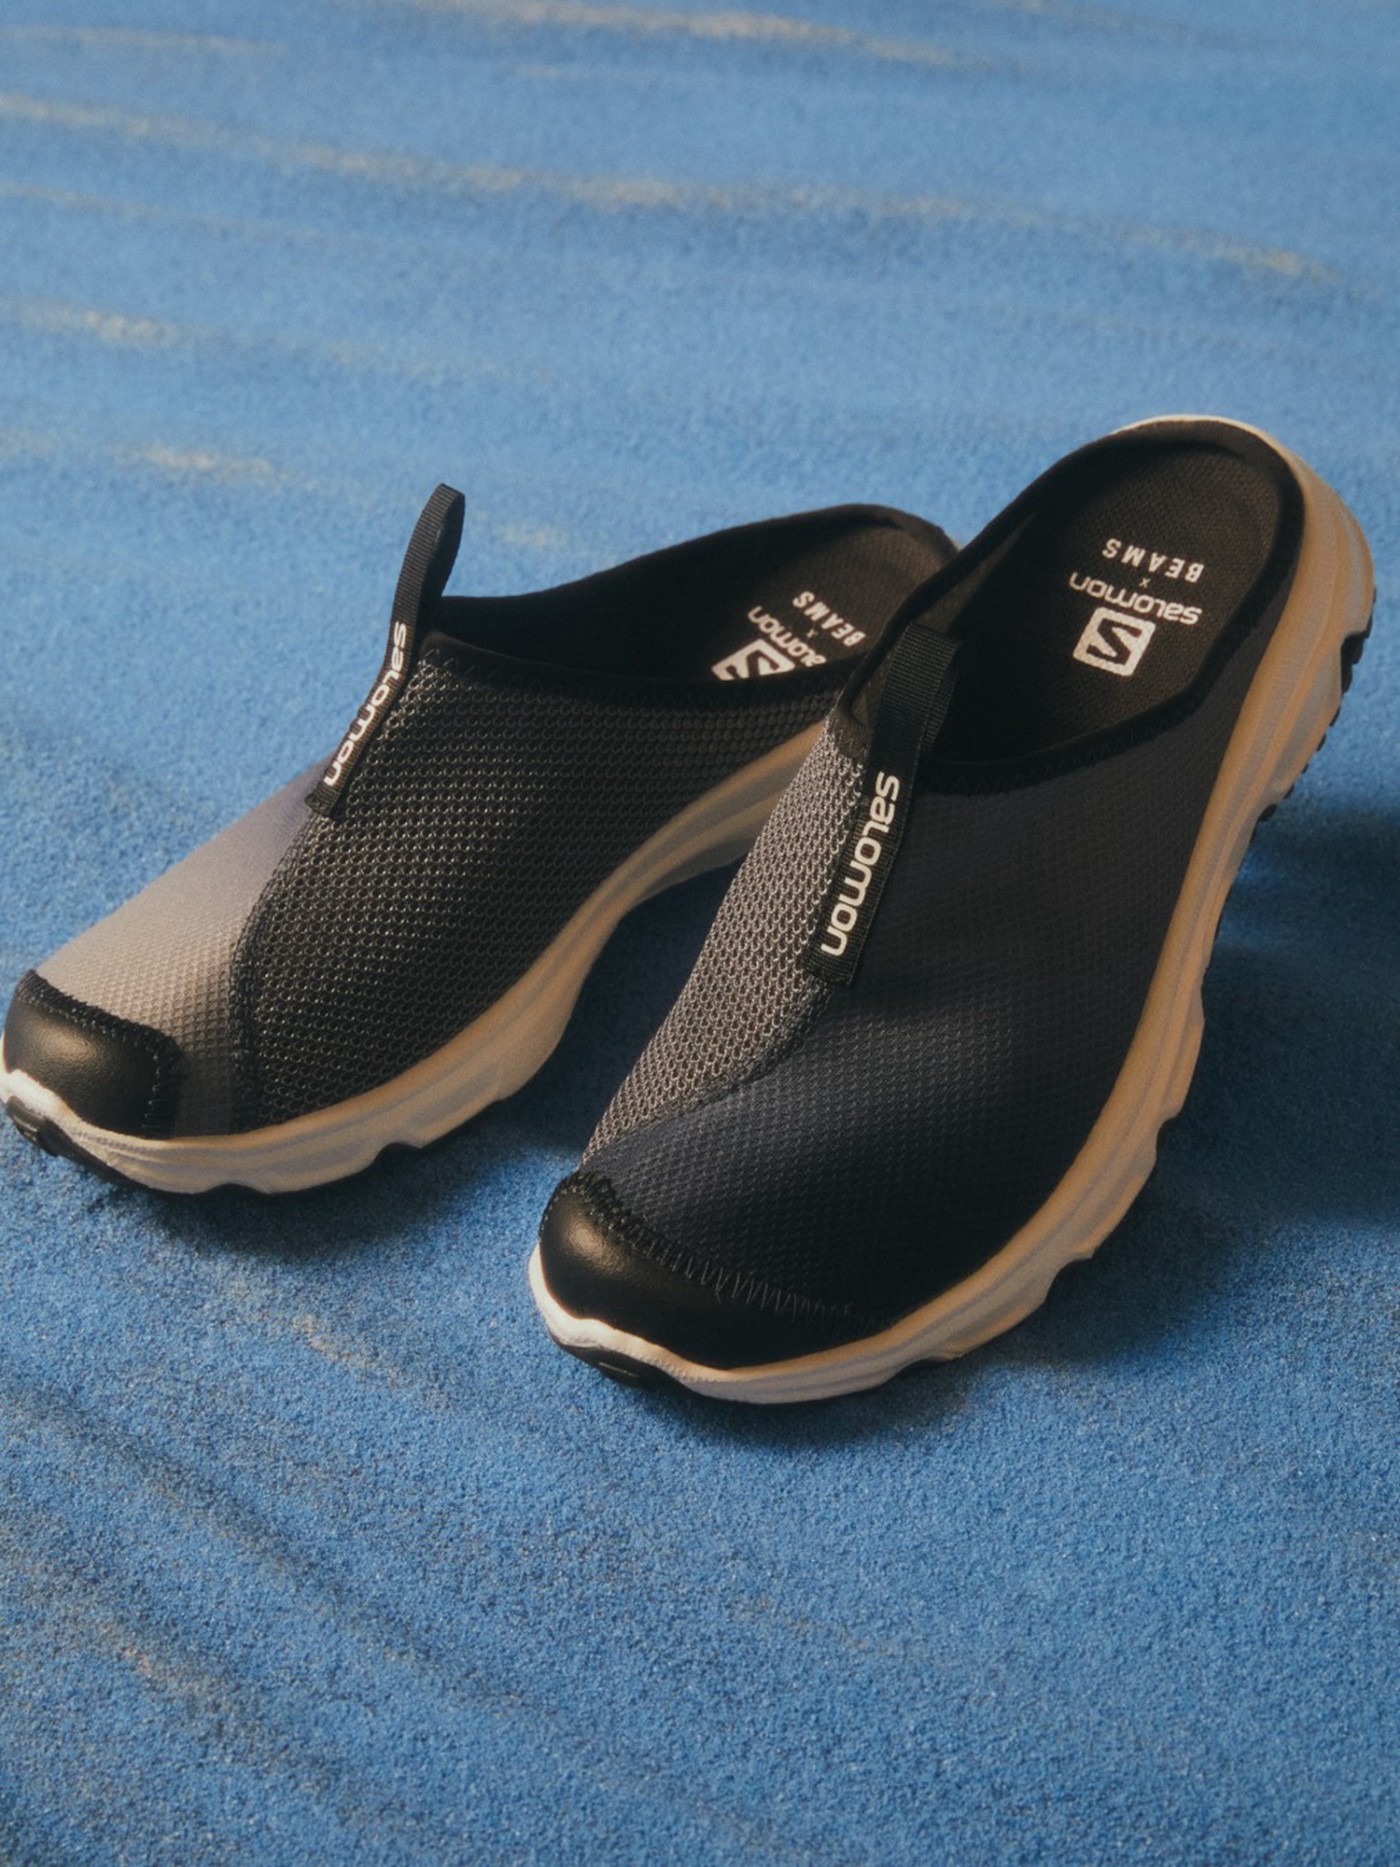 Salomon,BEAMS,RX SLIDE 3.0  这才是「夏天鞋王」！Salomon x BEAMS 新鞋登场！